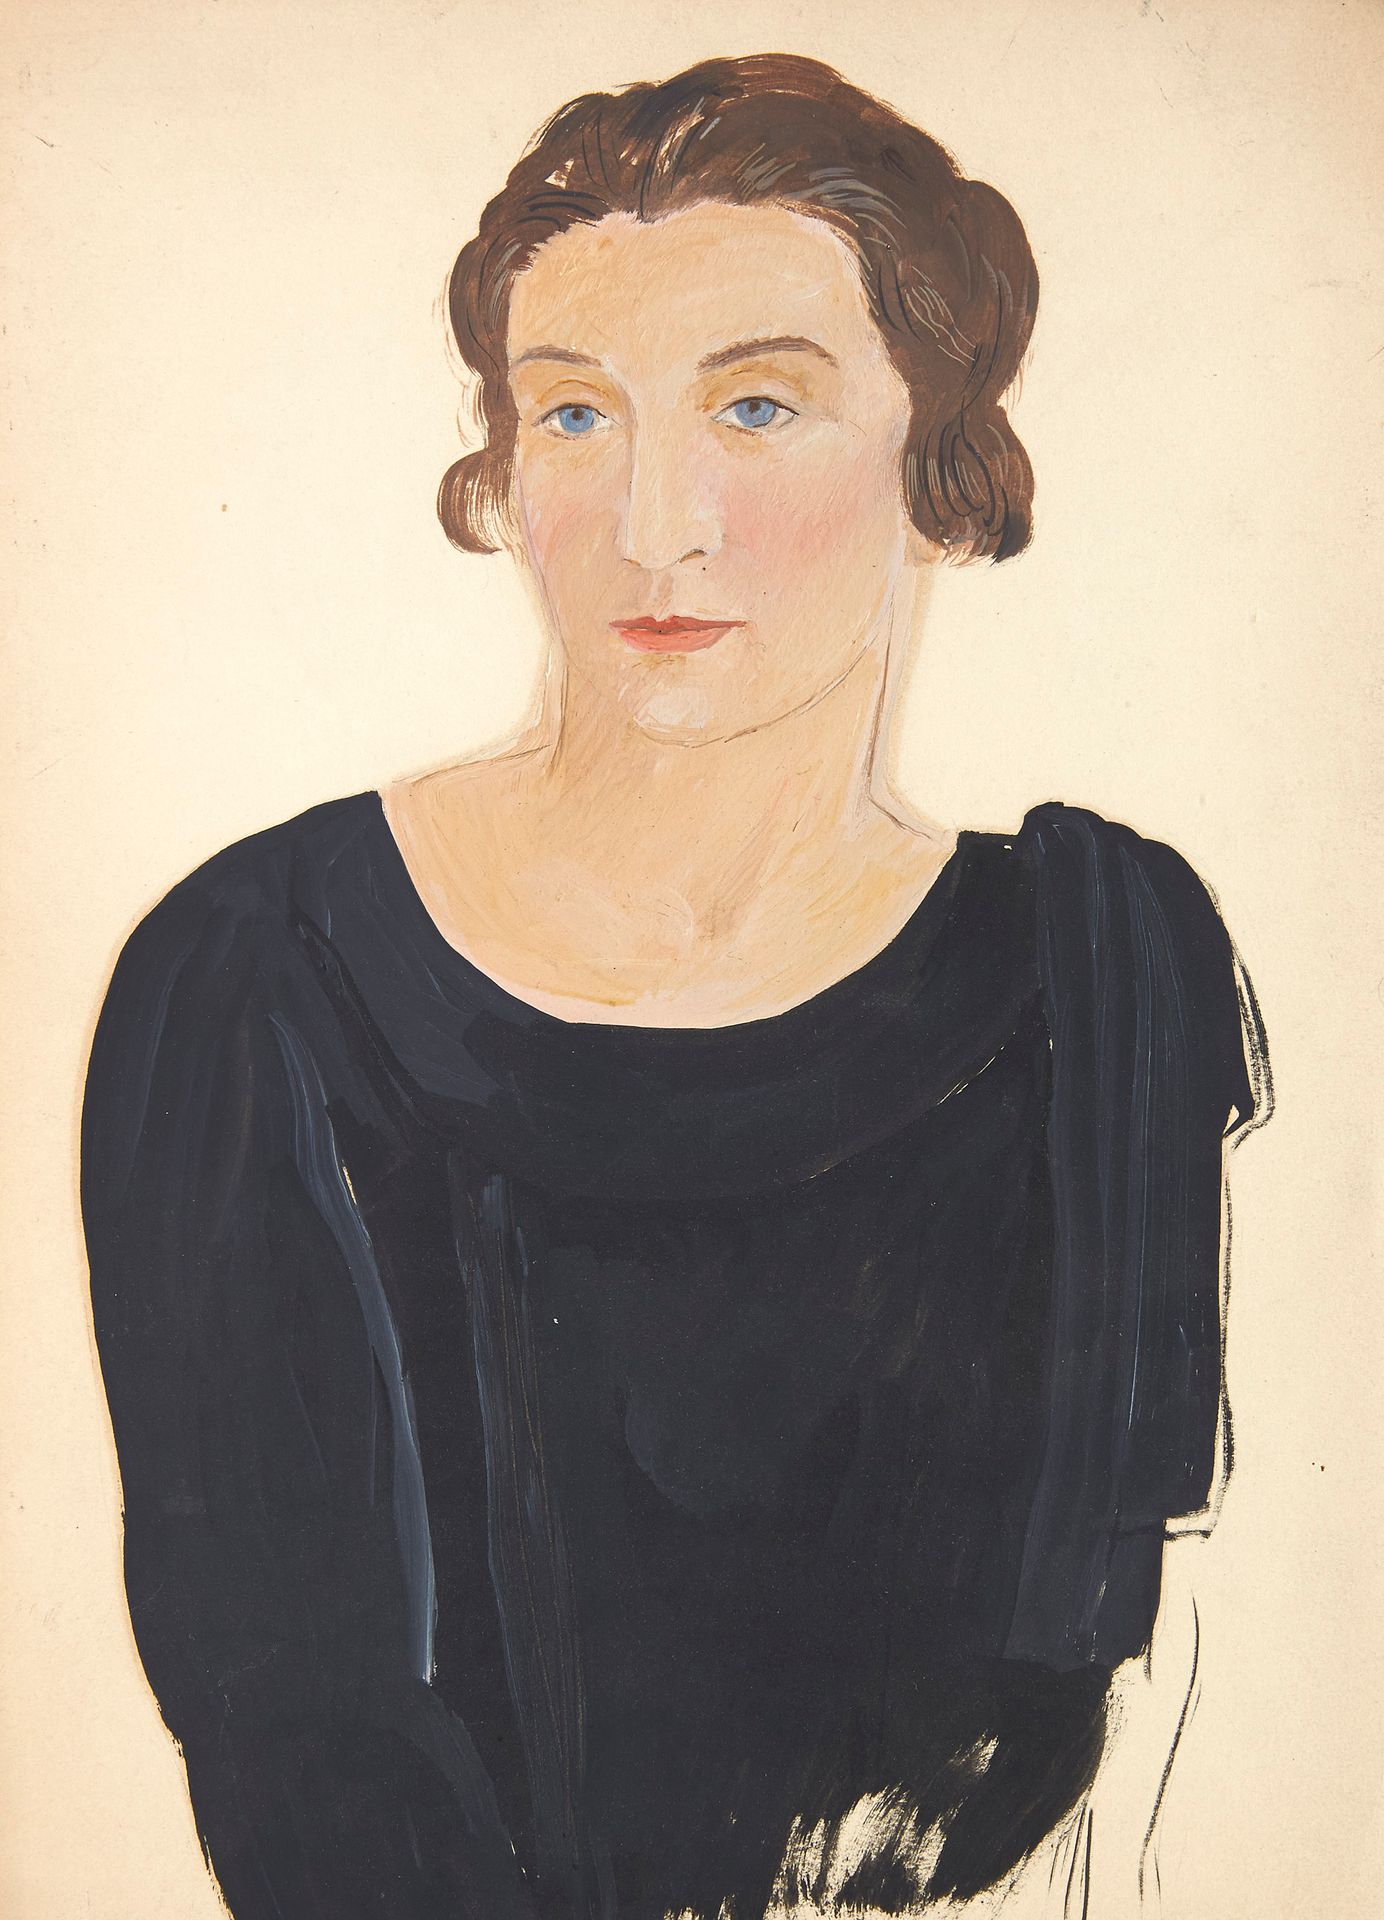 Null 尼古拉-伊泽尔诺夫 (1891-1981)

玛丽-拉戈里亚乌（画家的妻子）的画像

纸上水粉和油彩

31.5 x 23 厘米。



ИСЕЛЕН&hellip;